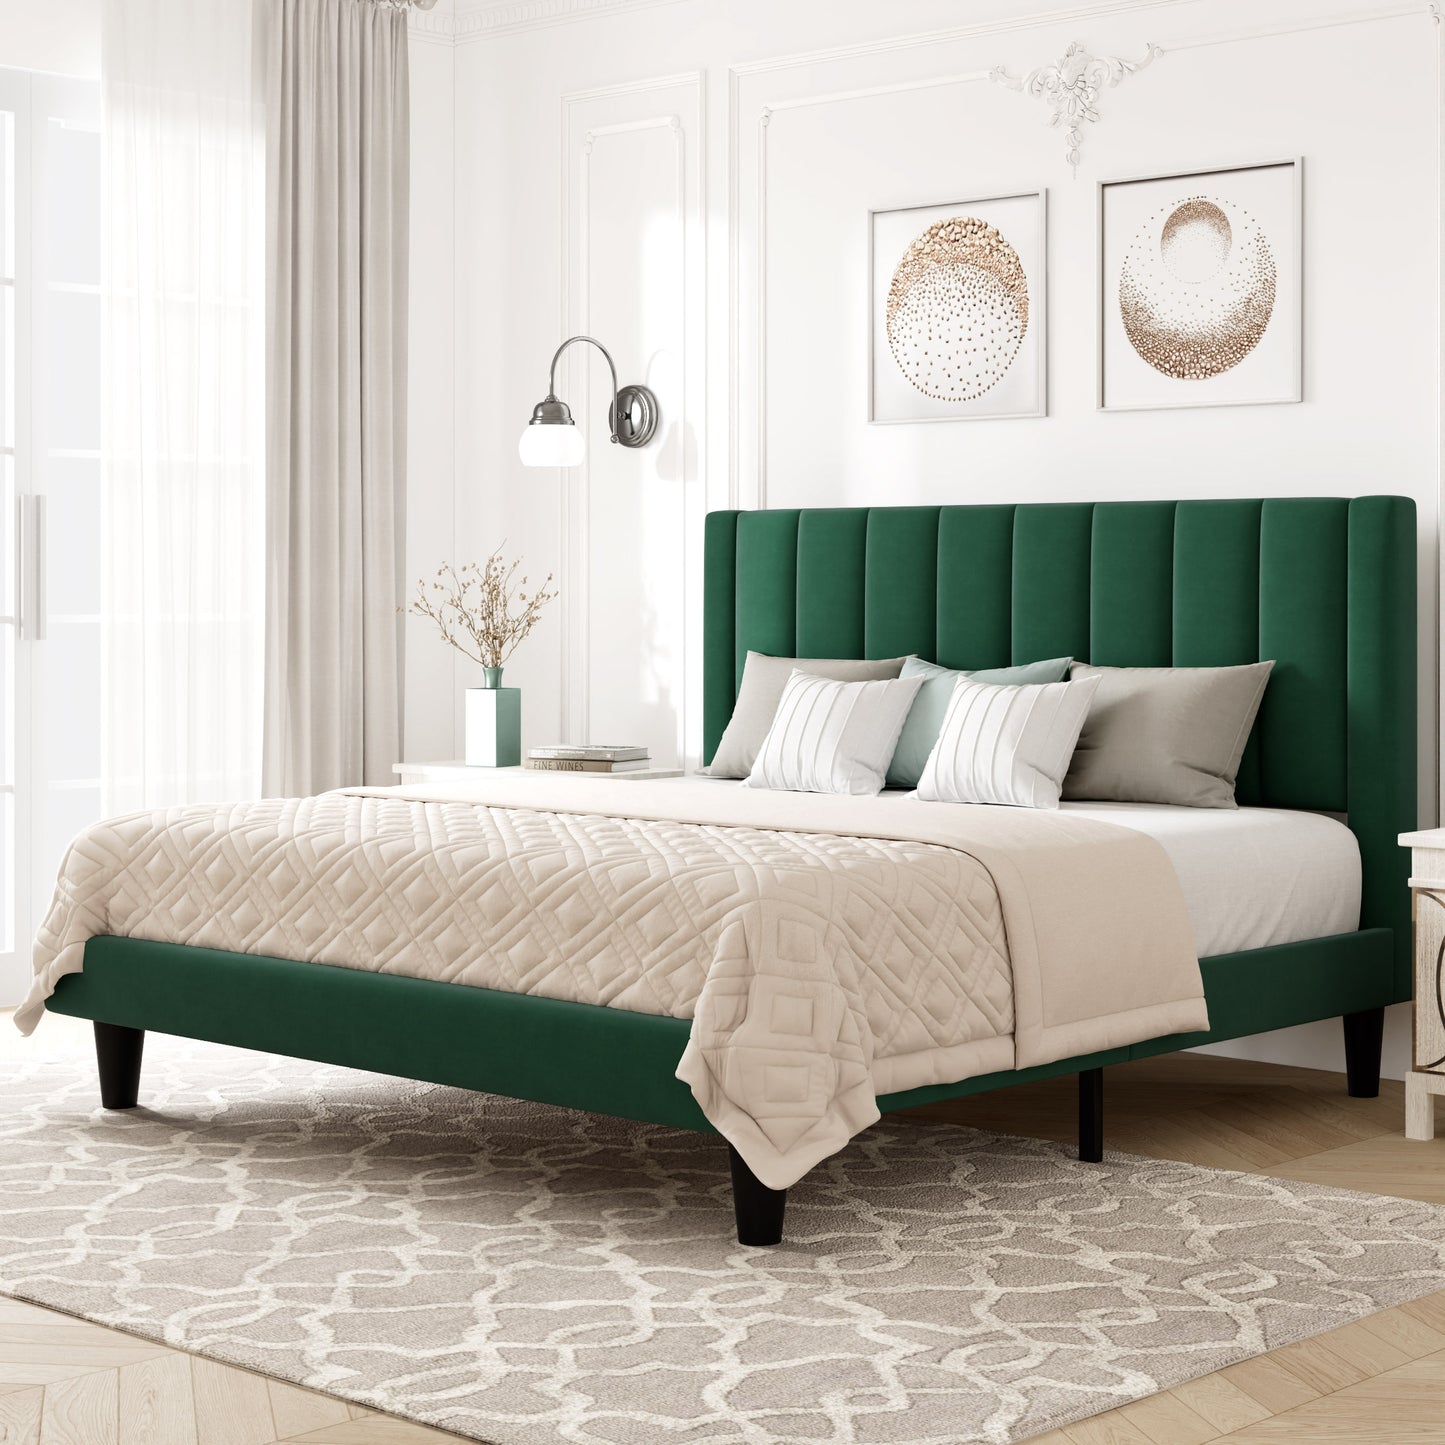 Allewie Full Size Velvet Upholstered Bed Frame with Vertical Channel Tufted Headboard, Green